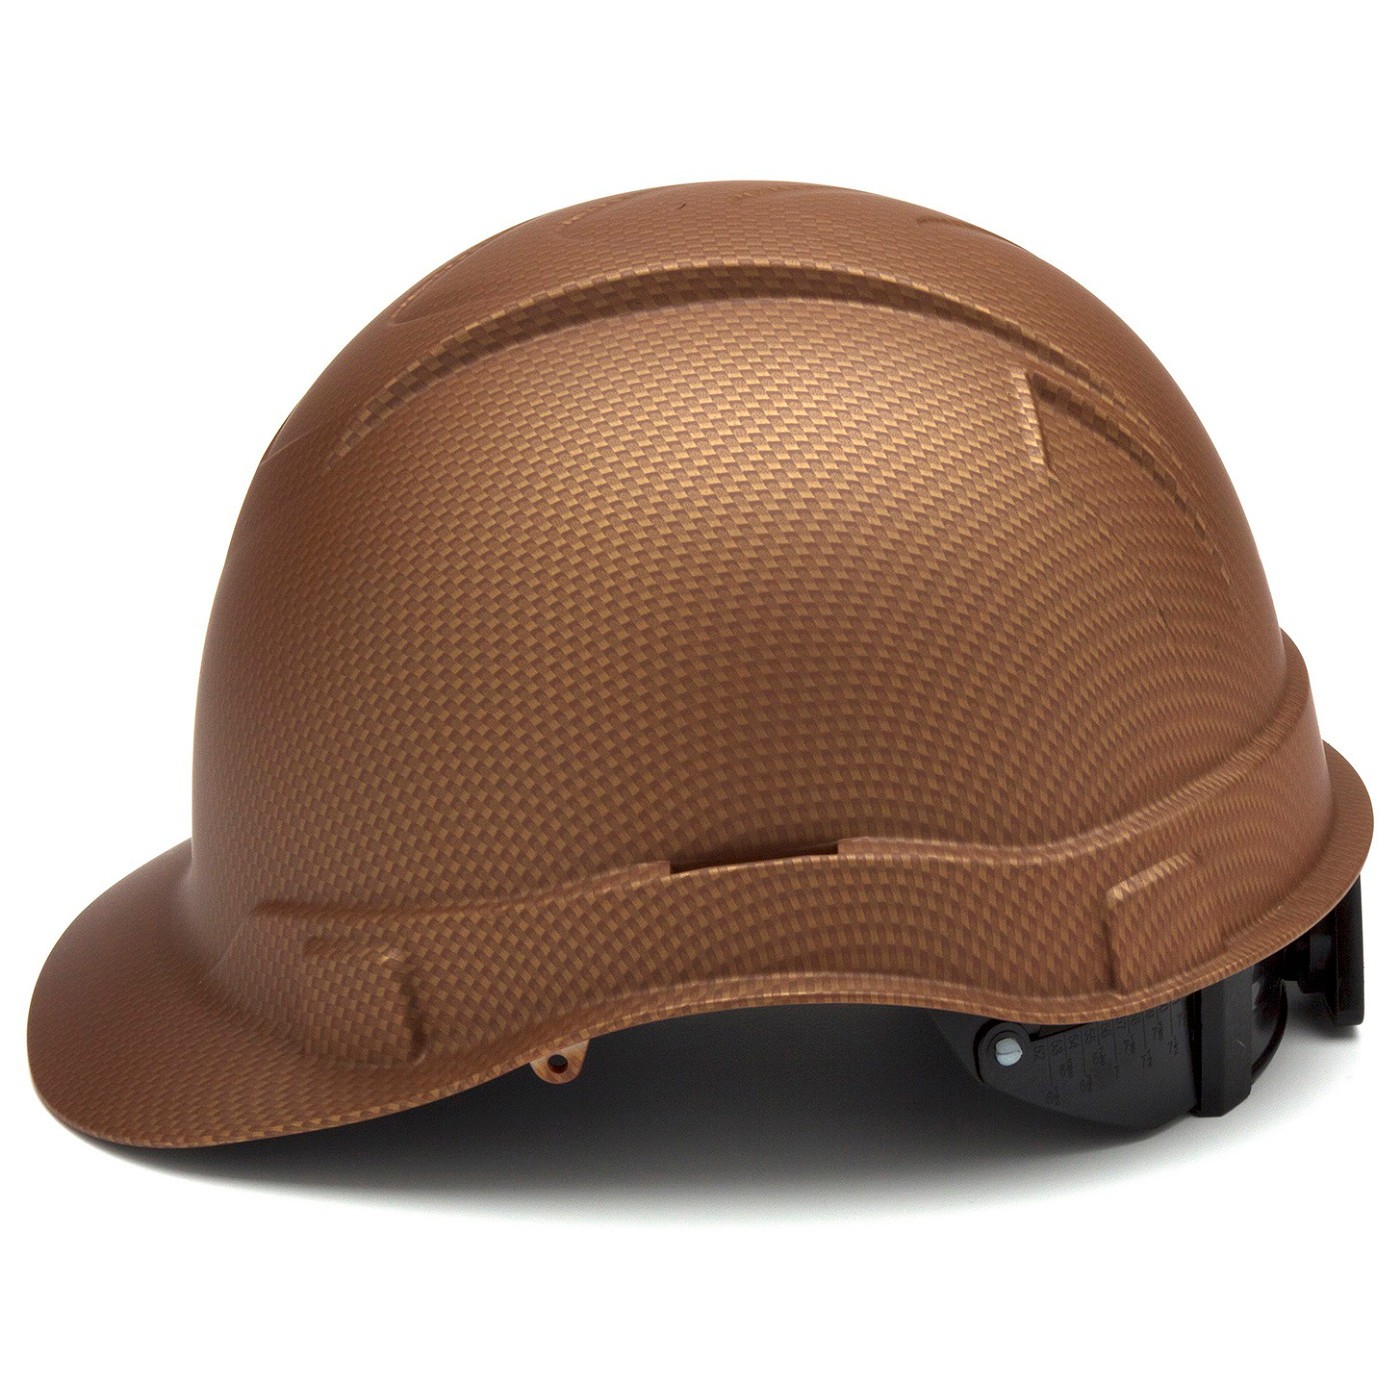 Pyramex Ridgeline Copper Pattern Cap Style 4pt Ratchet Hard Hat HP44118 for sale online 